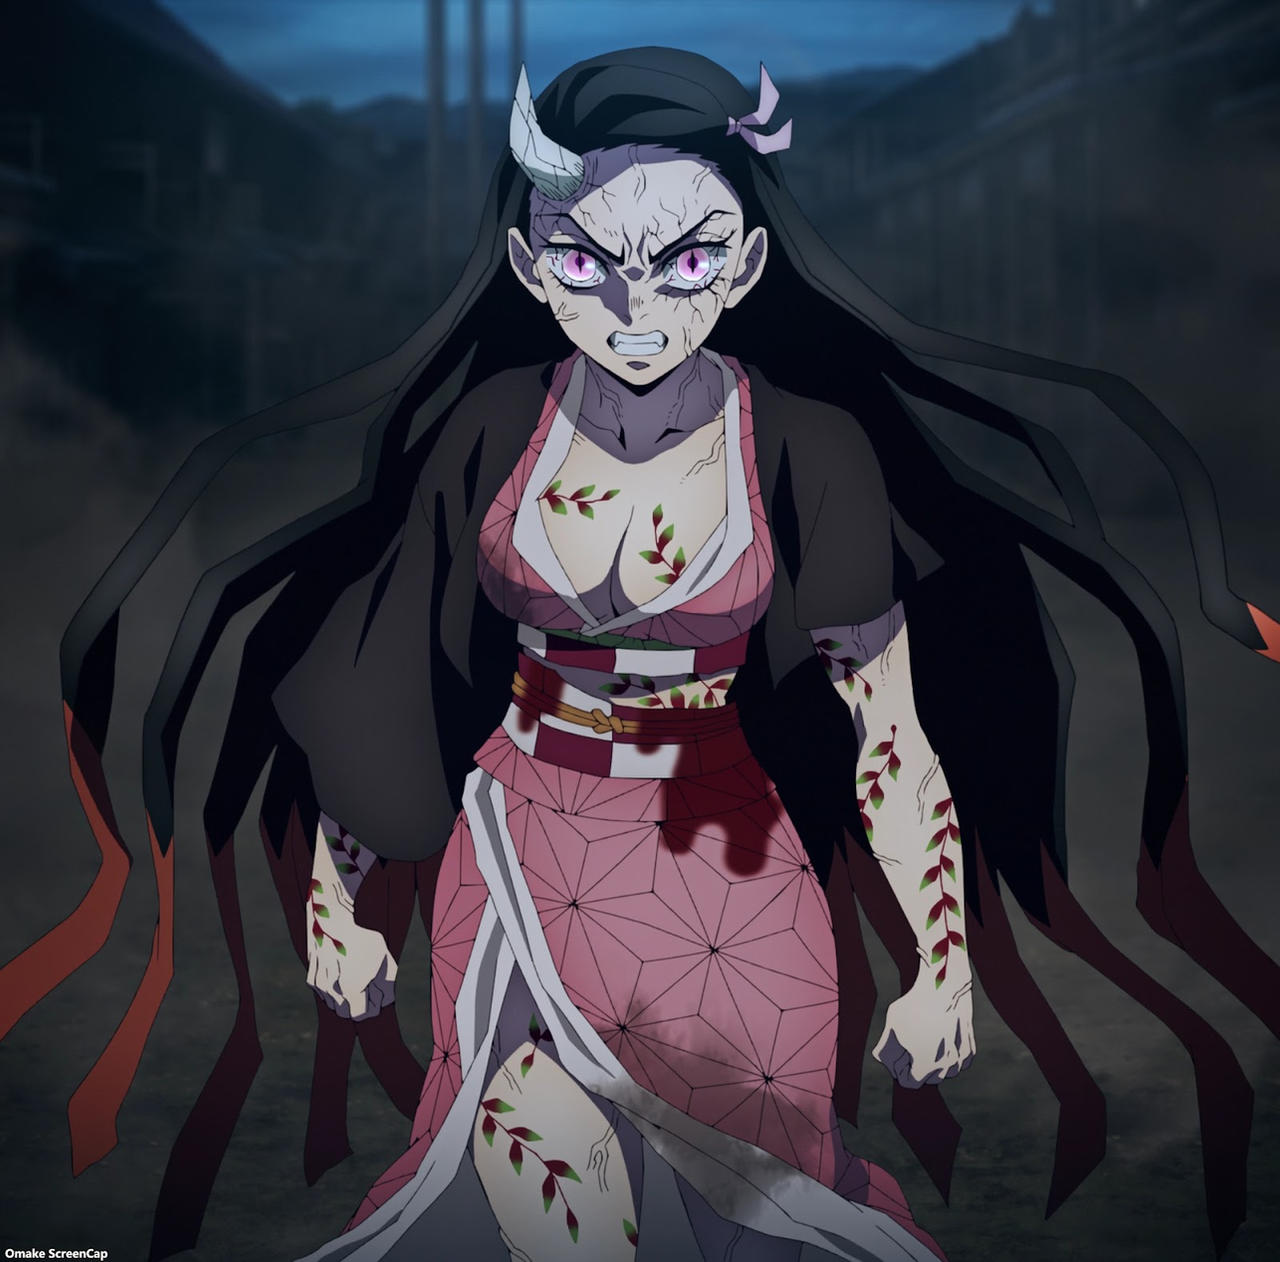 Os 10 Onis mais antigos de Demon Slayer: Kimetsu no Yaiba